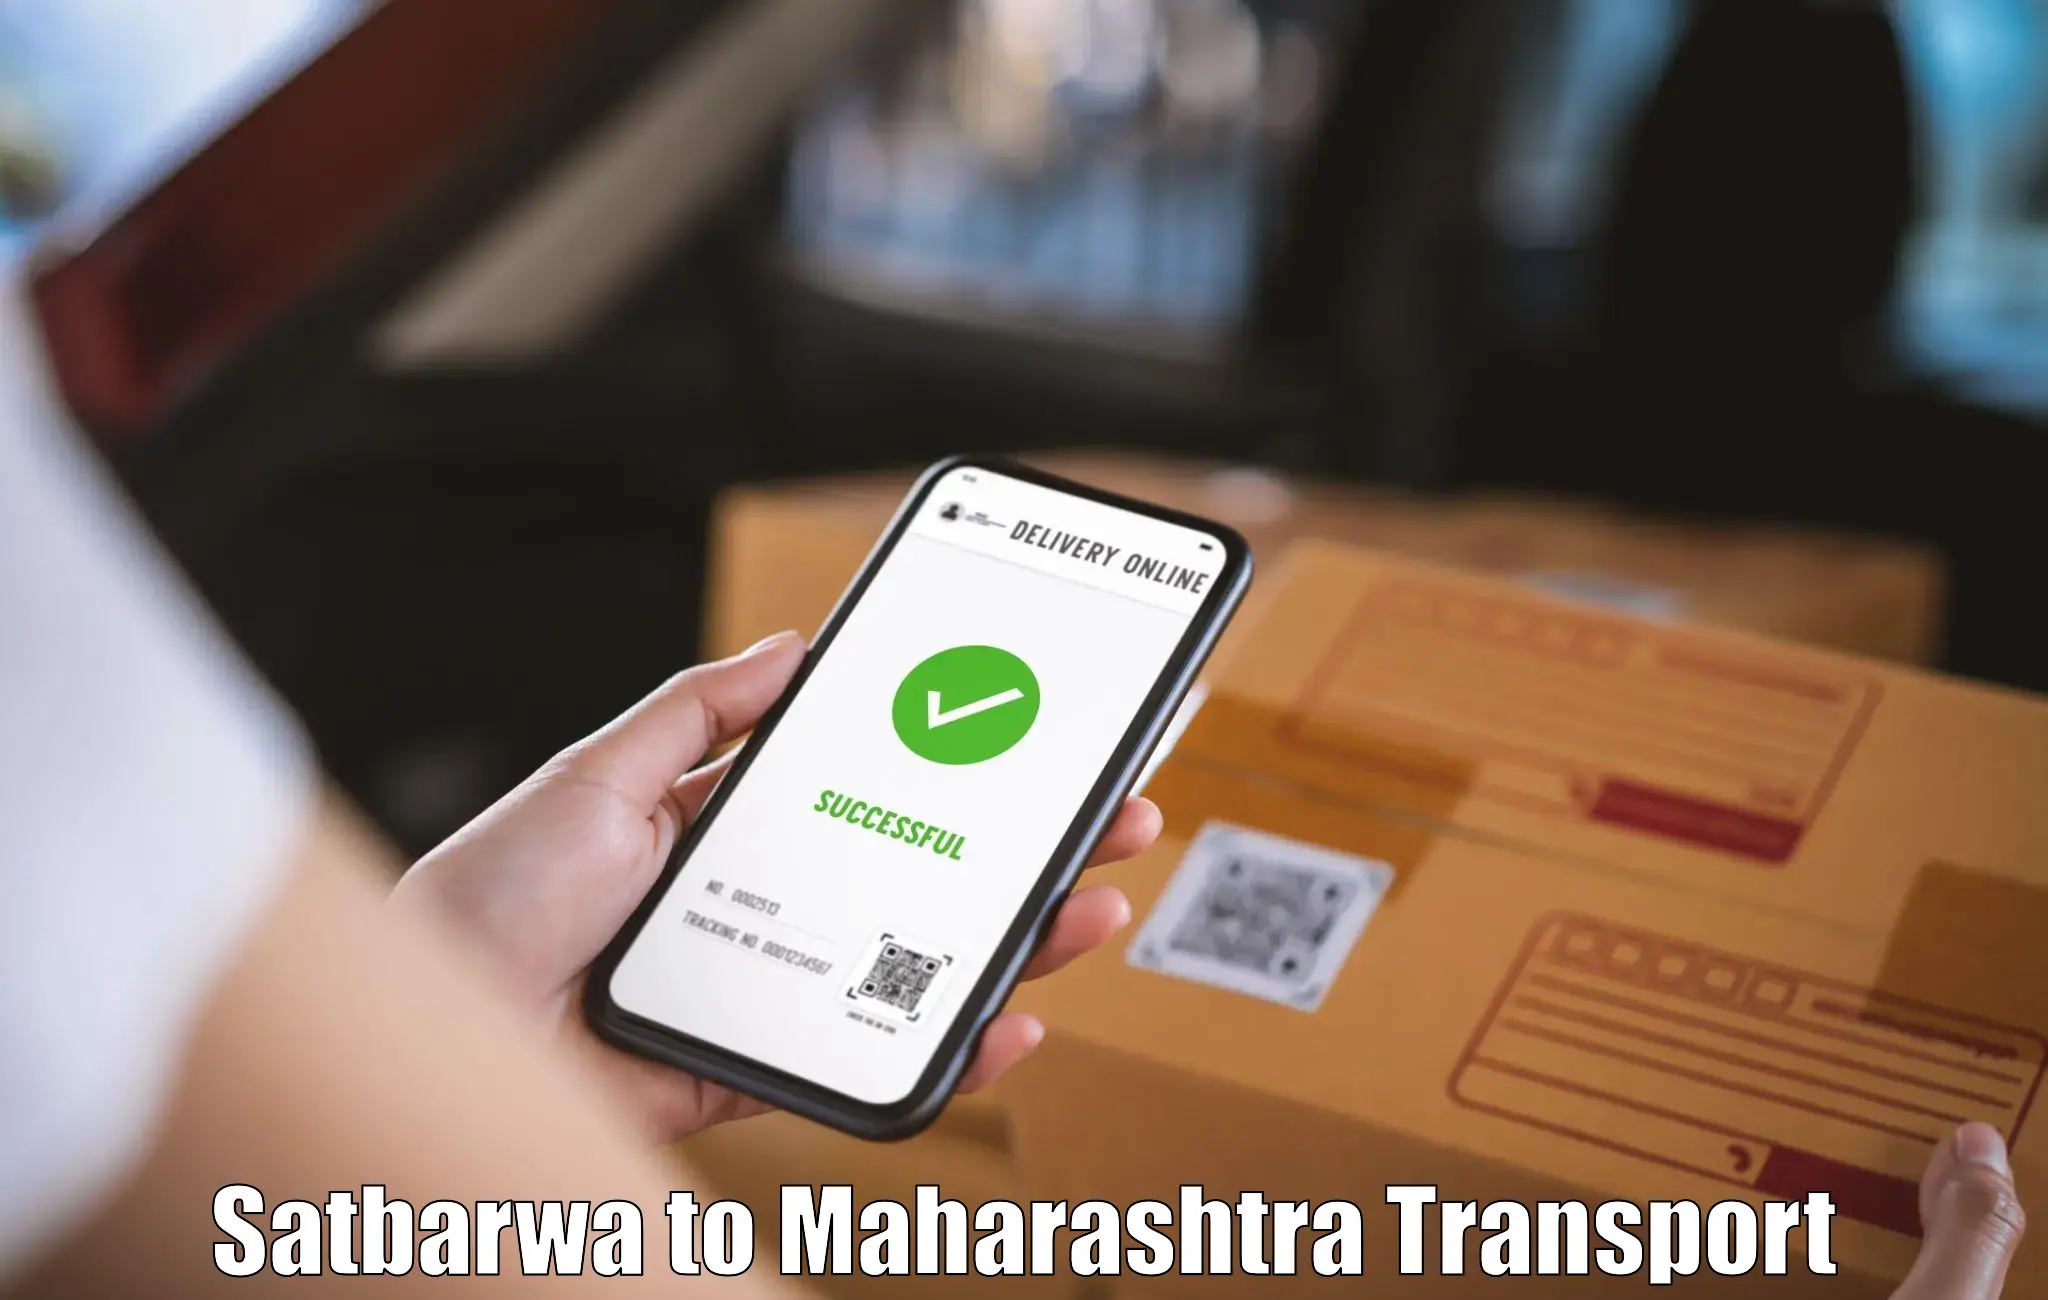 Container transportation services Satbarwa to Ahmednagar